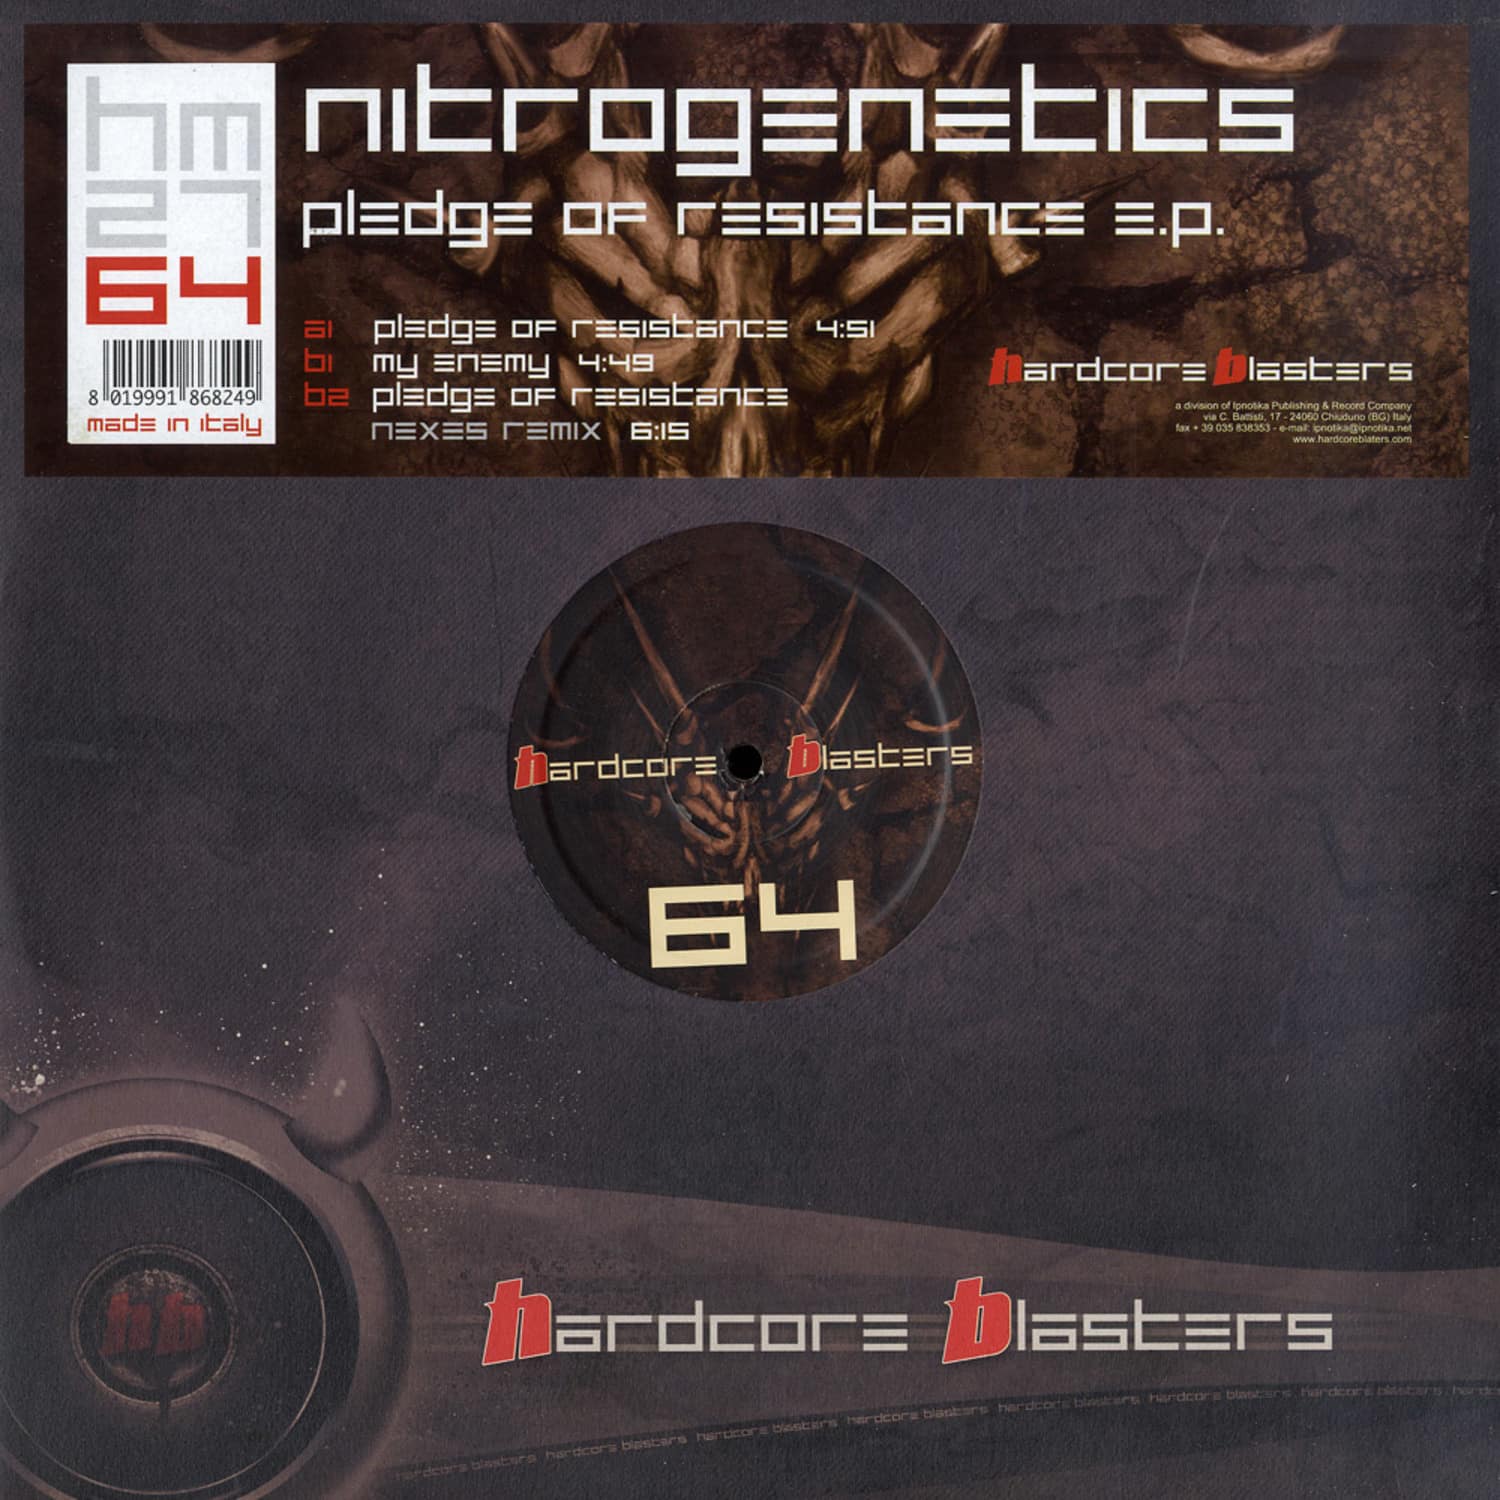 Nitrogenetics - PLEDGE OF RESISTANCE EP